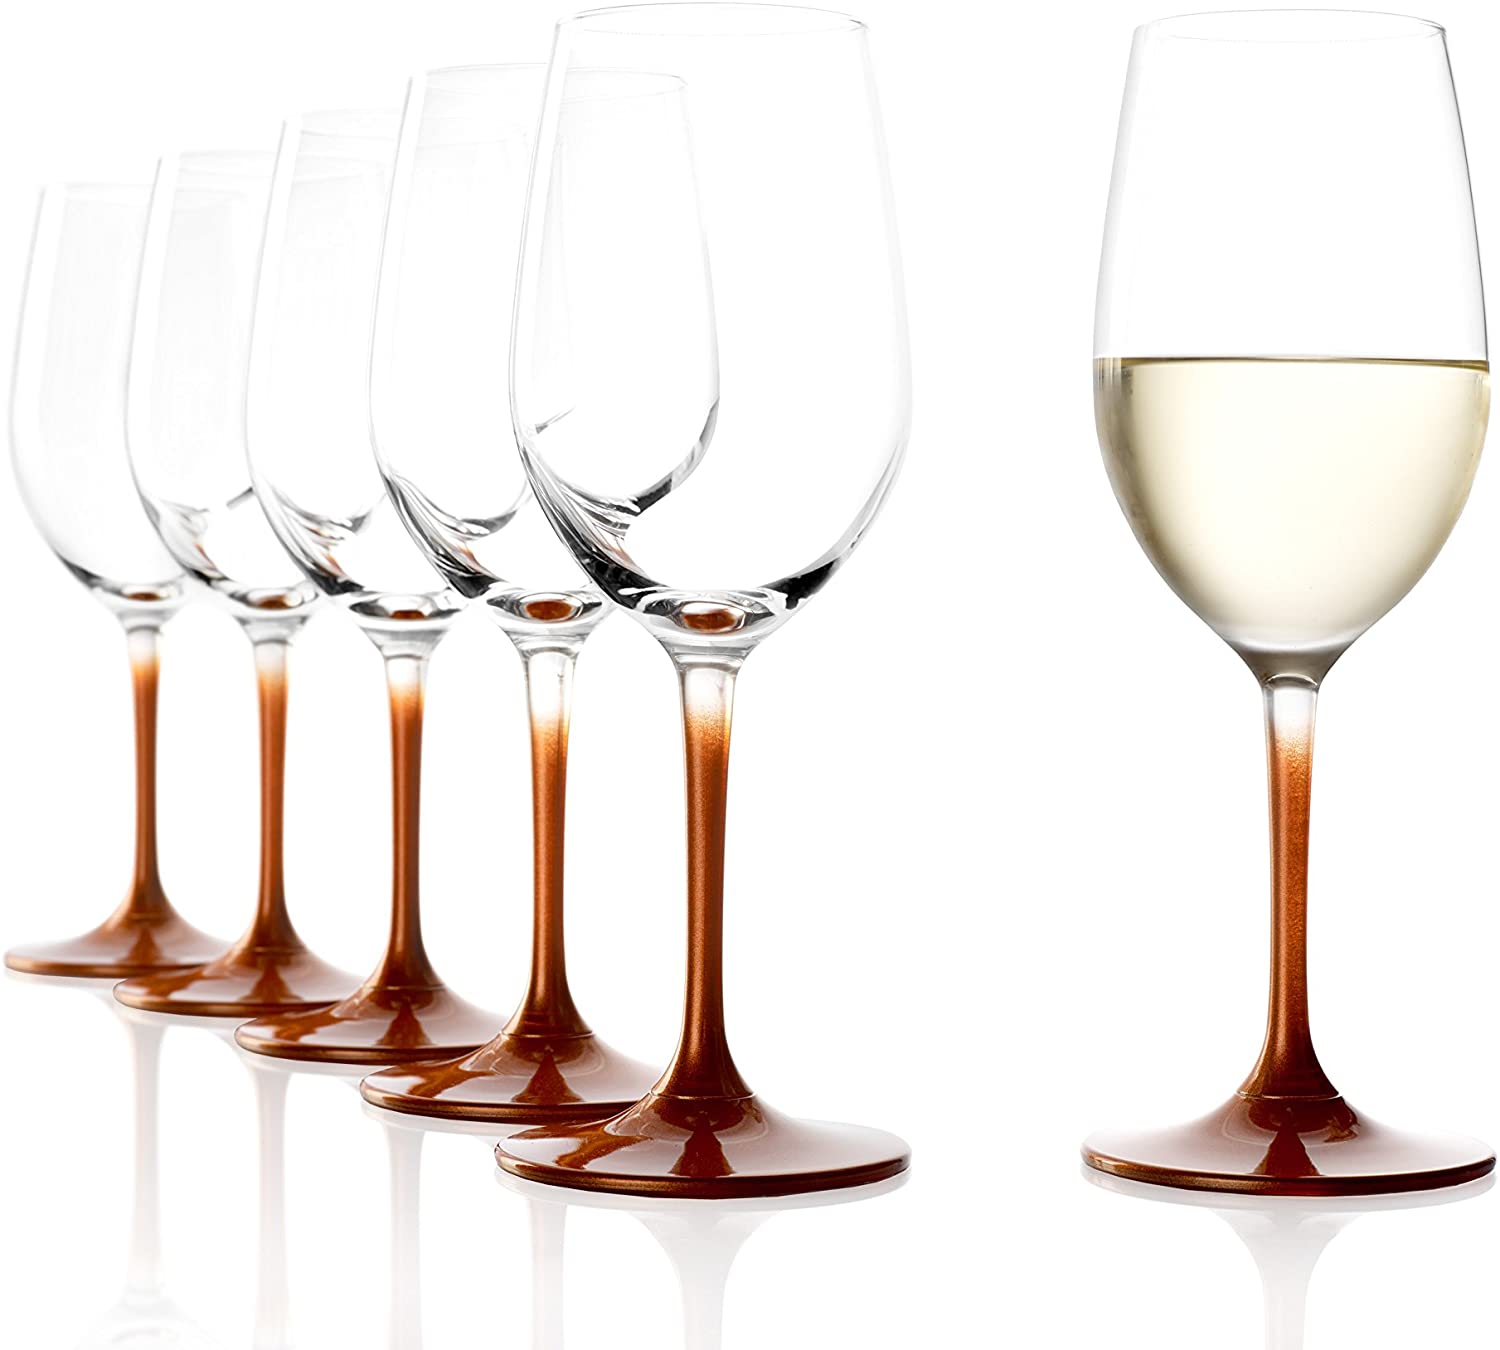 STÖLZLE LAUSITZ White Wine Glasses Event 360 ml in Bronze I White Wine Glasses Set of 6 I Wine Glasses Dishwasher Safe I White Wine Goblets Set Shatterproof I High Quality Crystal Glass I Highest Quality